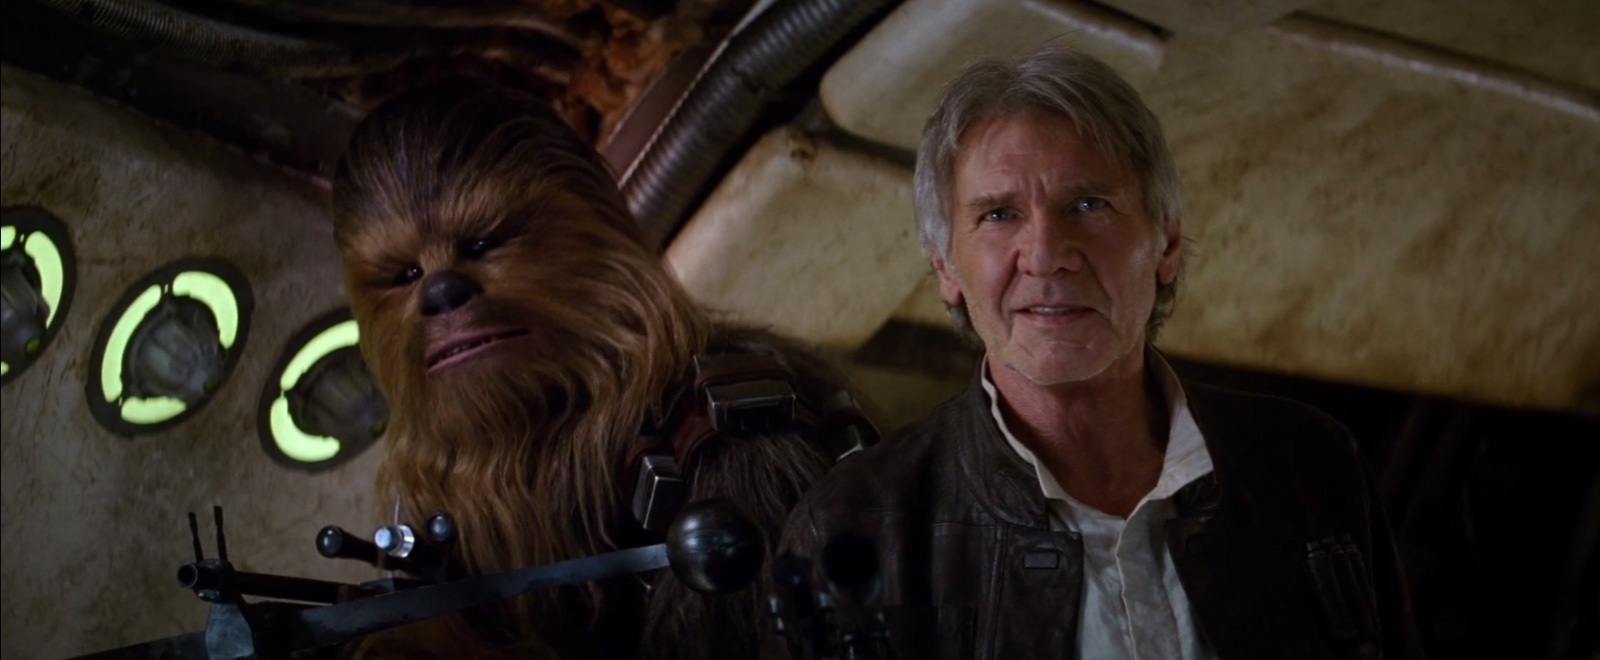 Plik:Han i Chewie.jpg